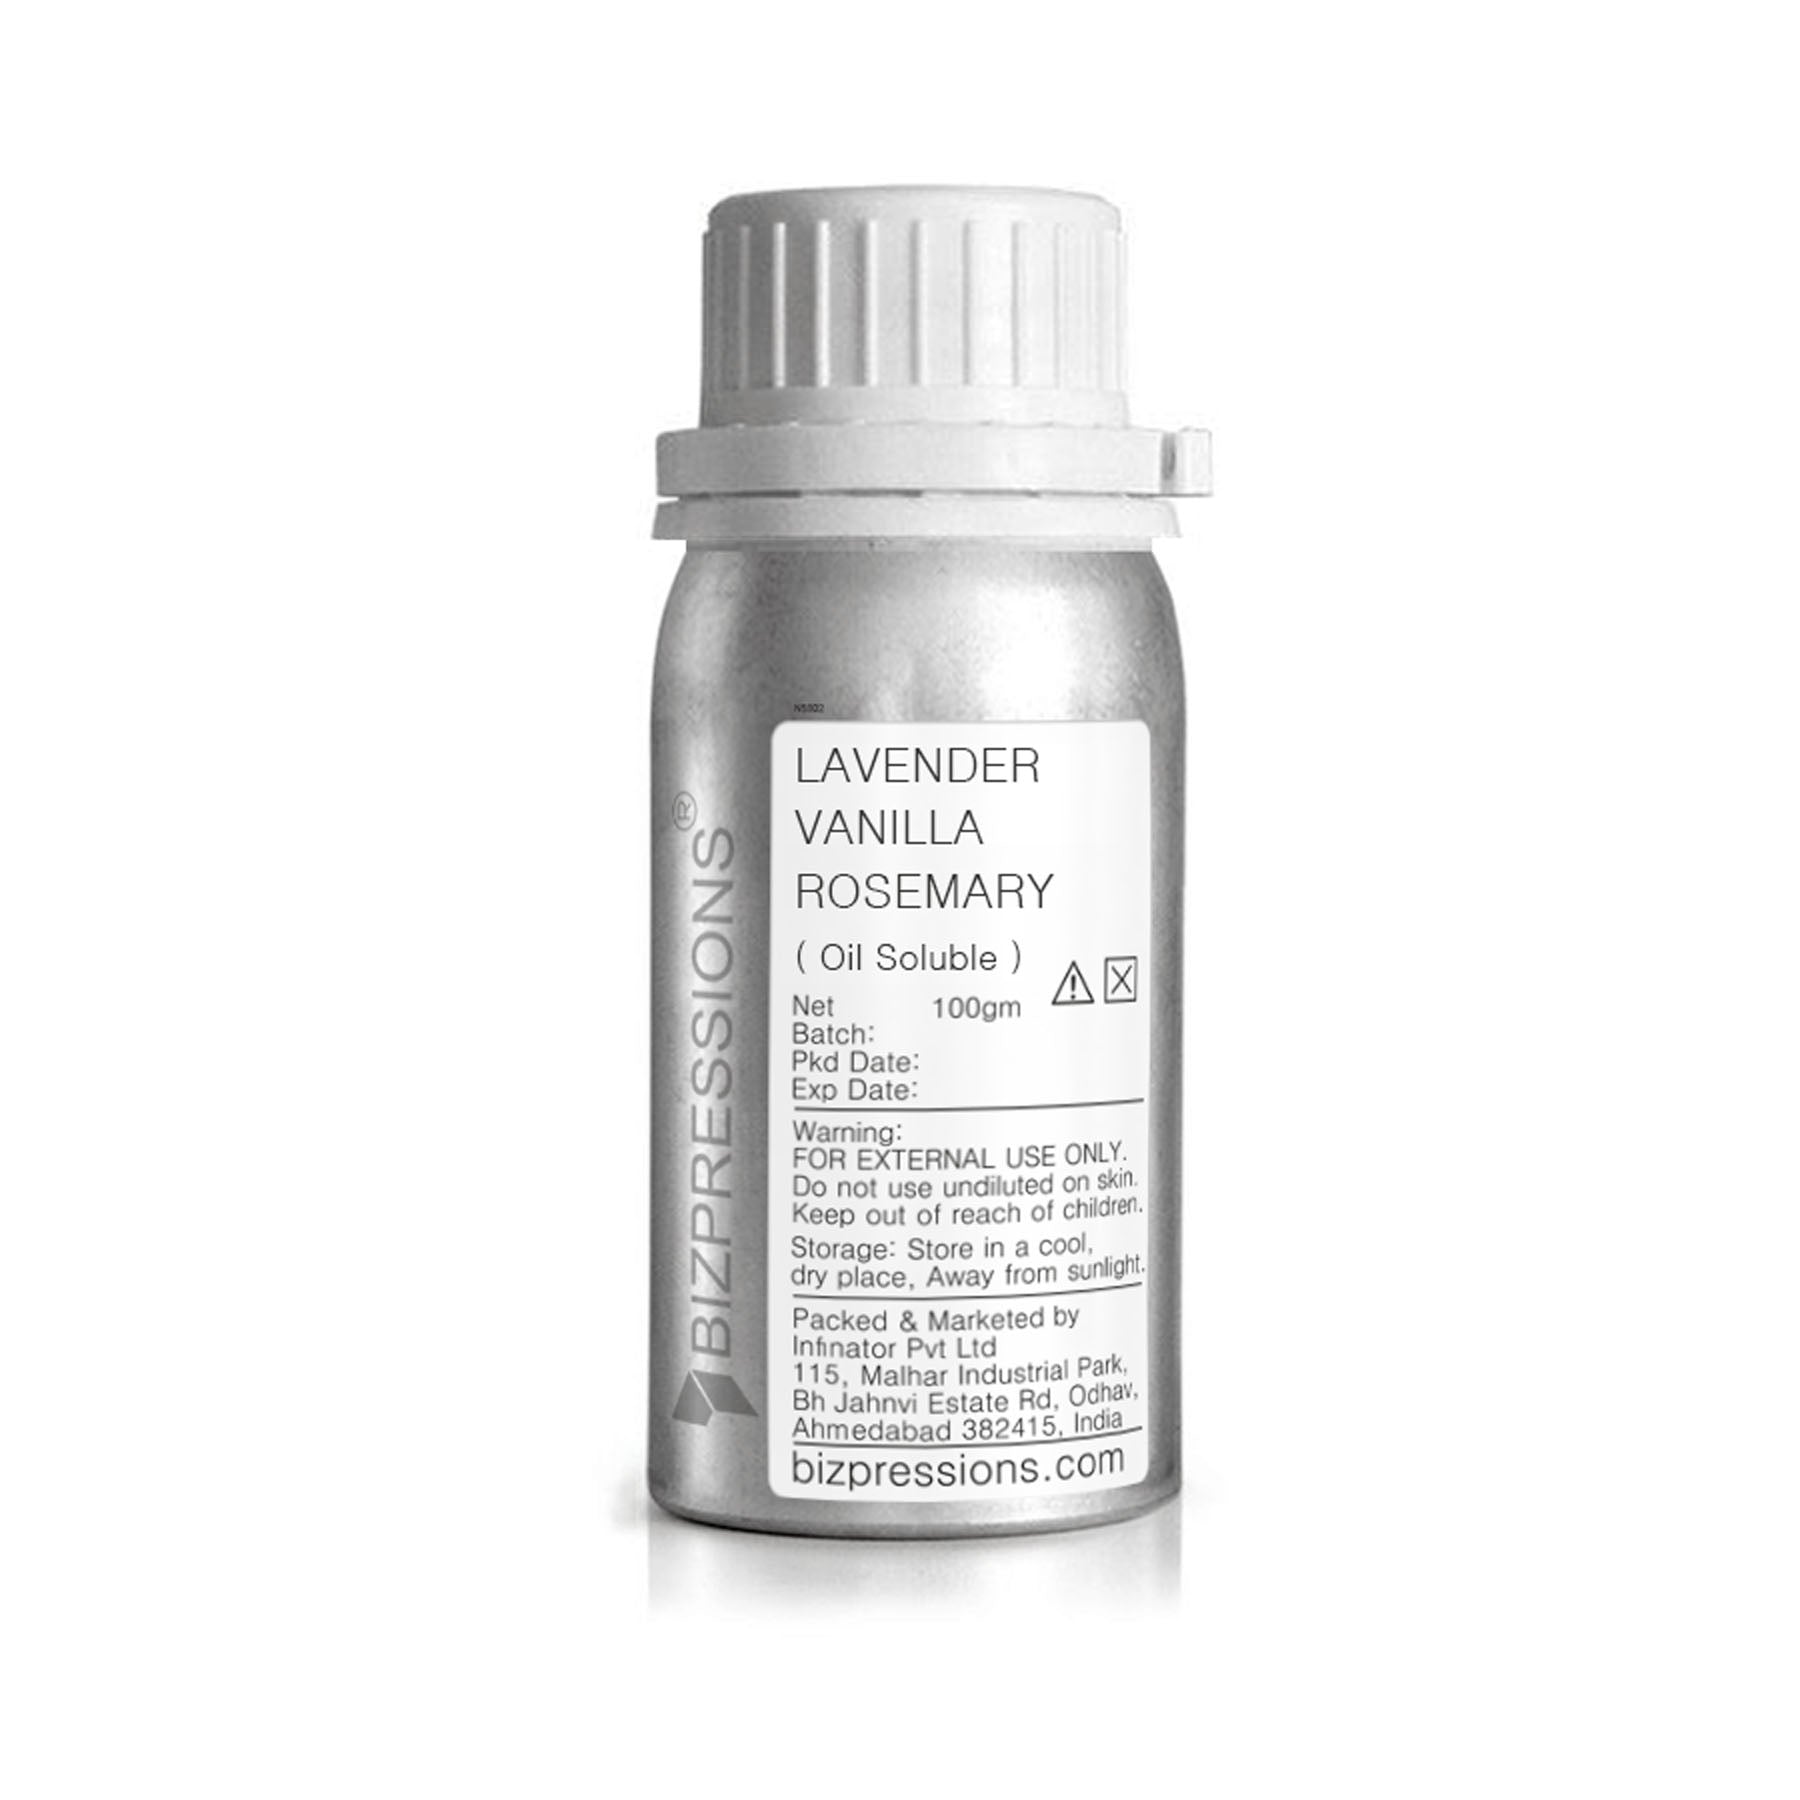 LAVENDER VANILLA ROSEMARY - Fragrance ( Oil Soluble ) - 100 gm